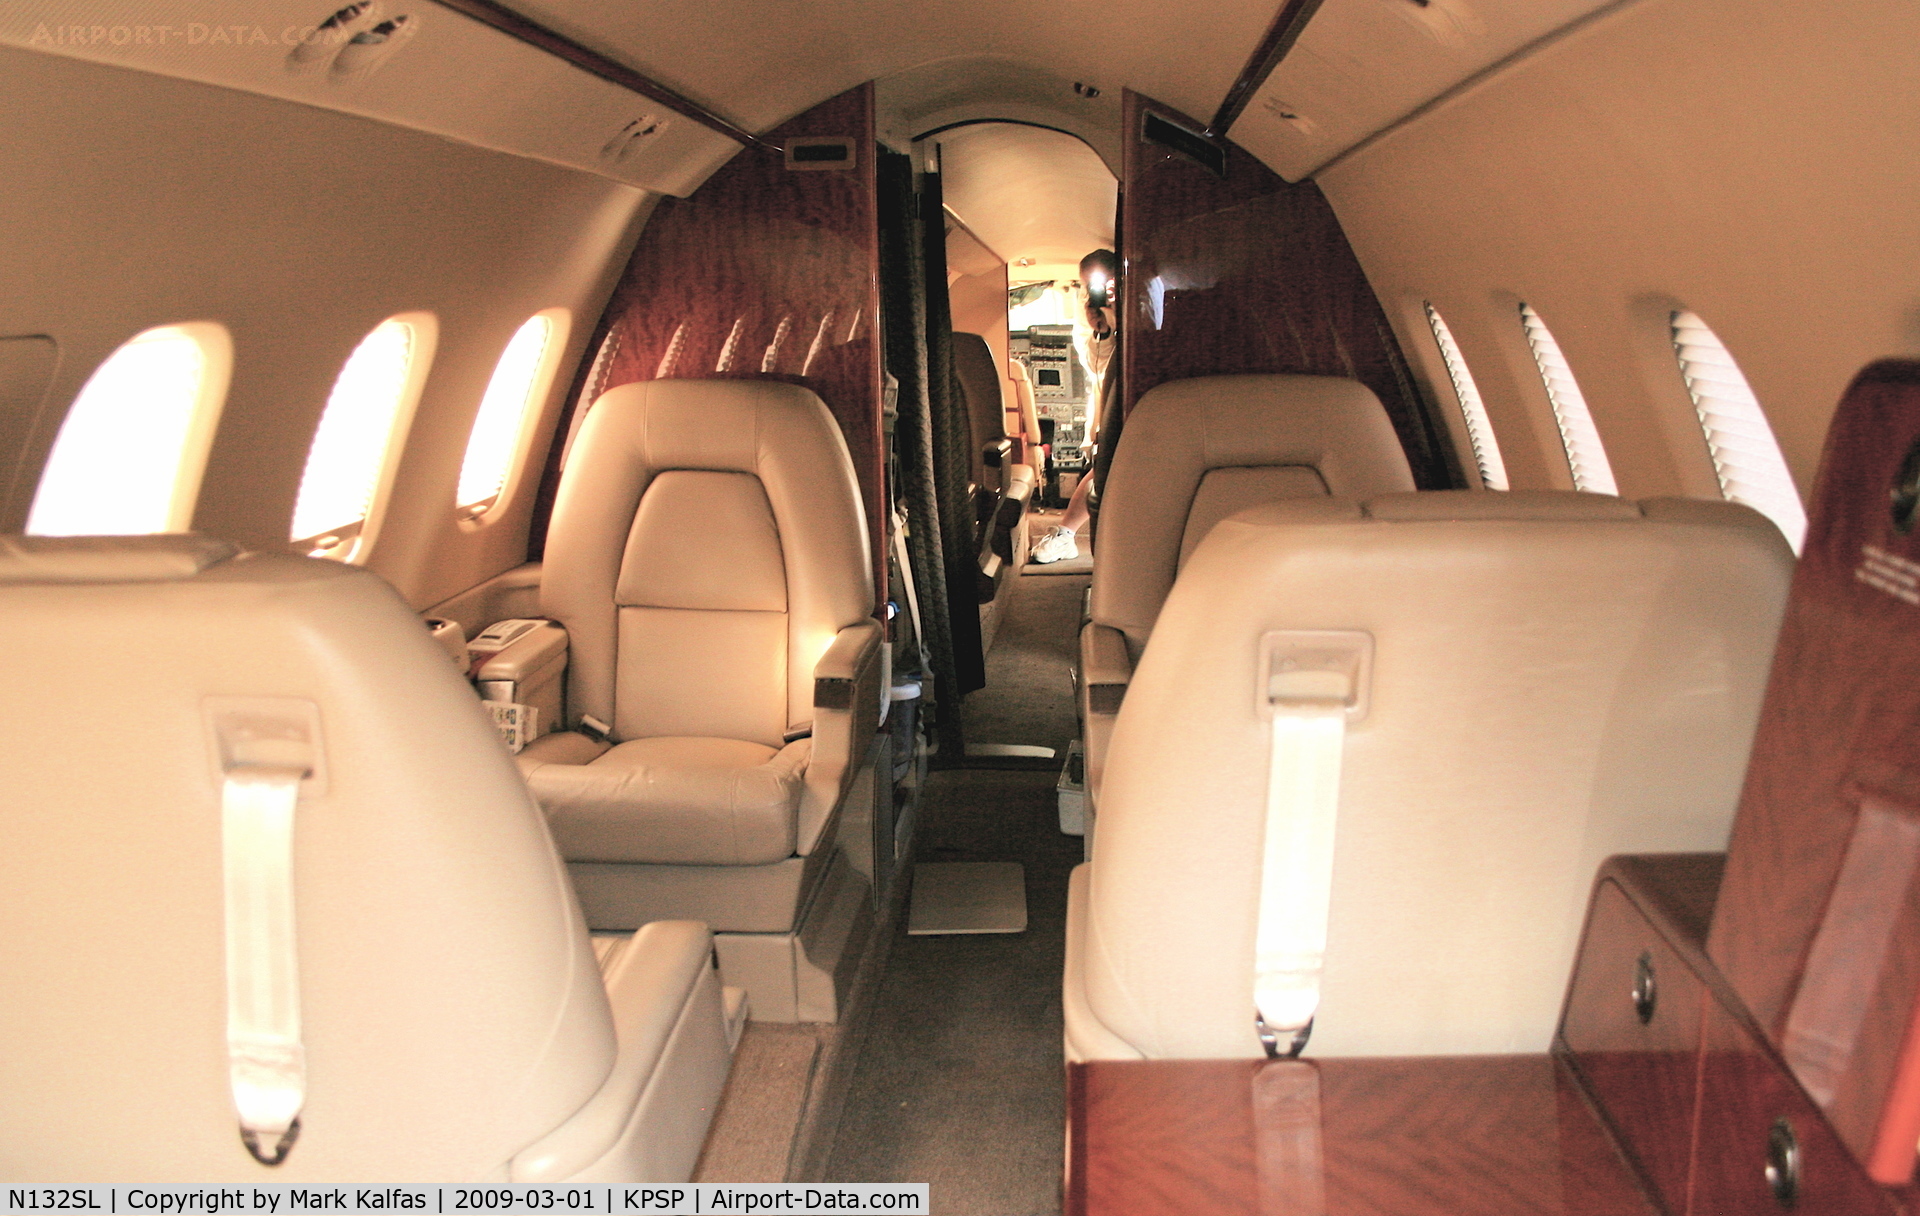 N132SL, 2005 Piaggio P-180 C/N 1098, Uncompromising comfort and quiet cabin - very impressive!